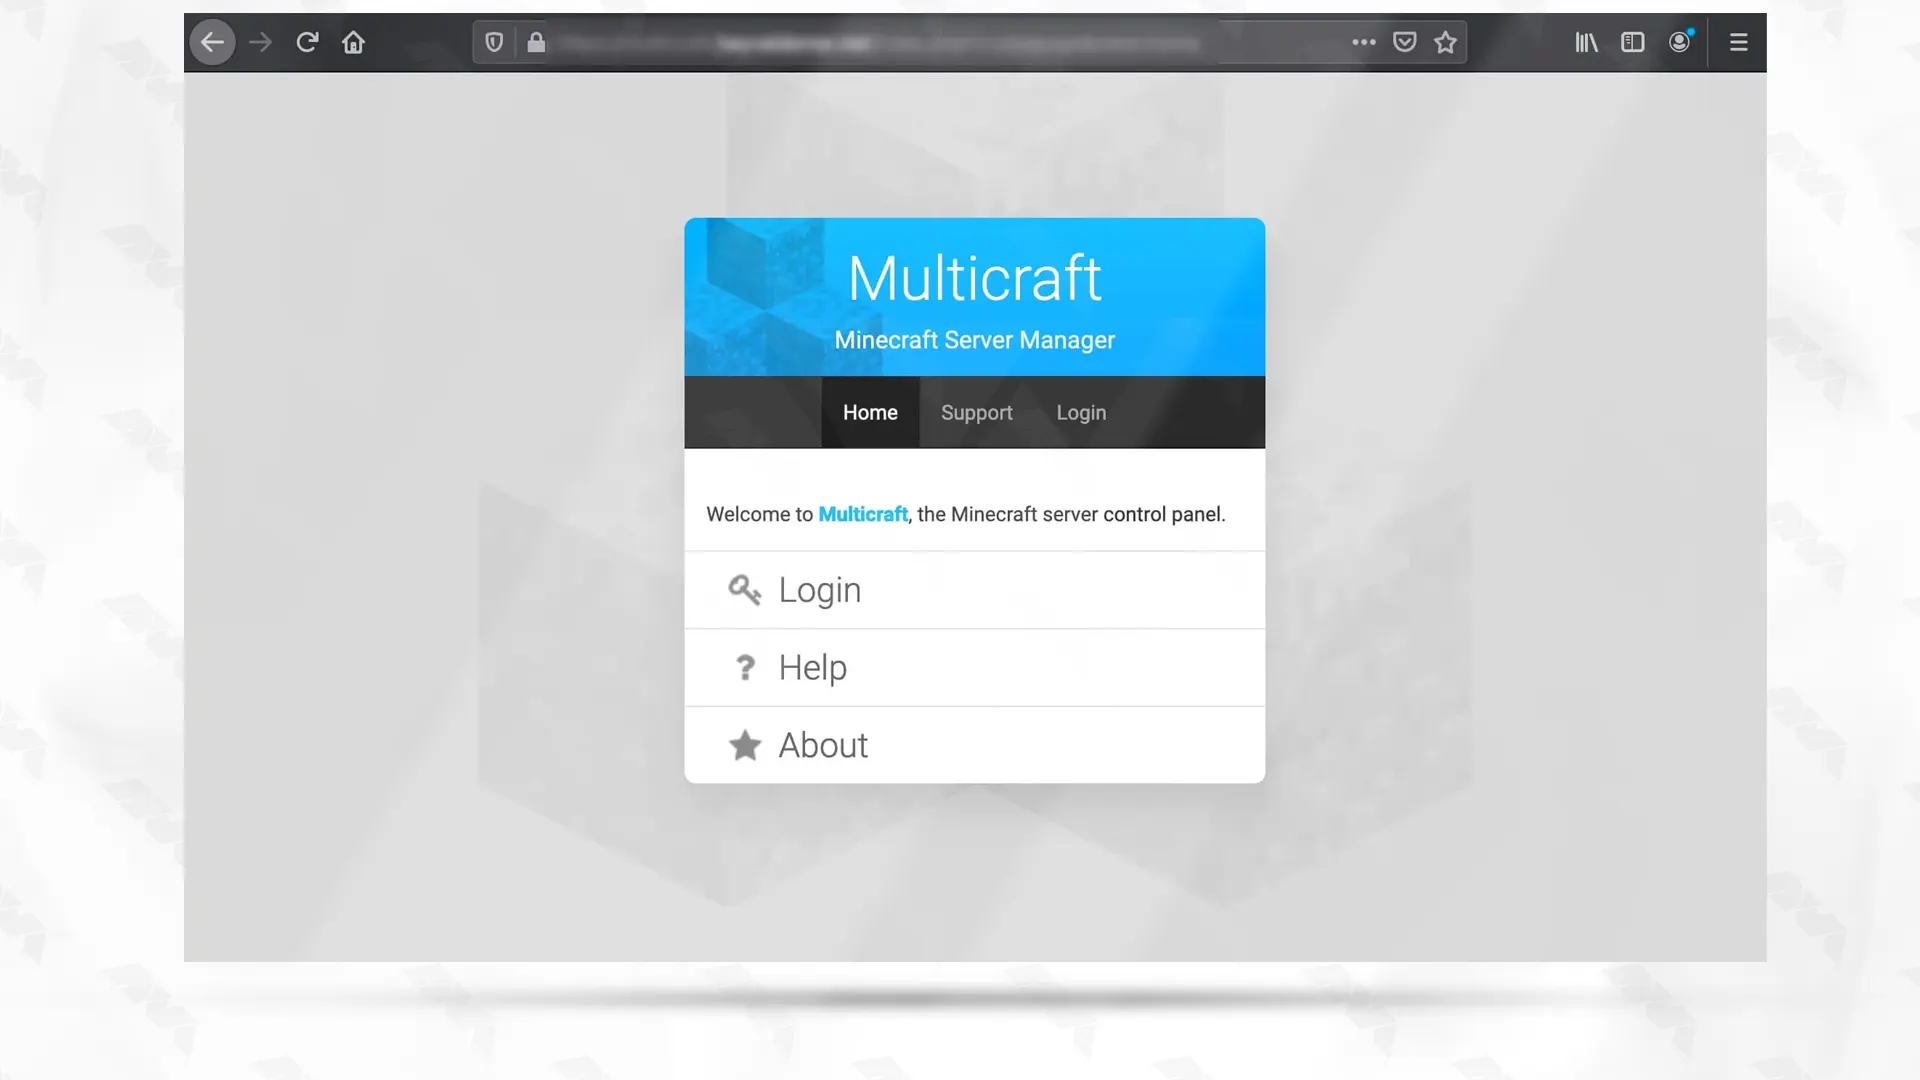 login to multicraft - Install Multicraft on Windows